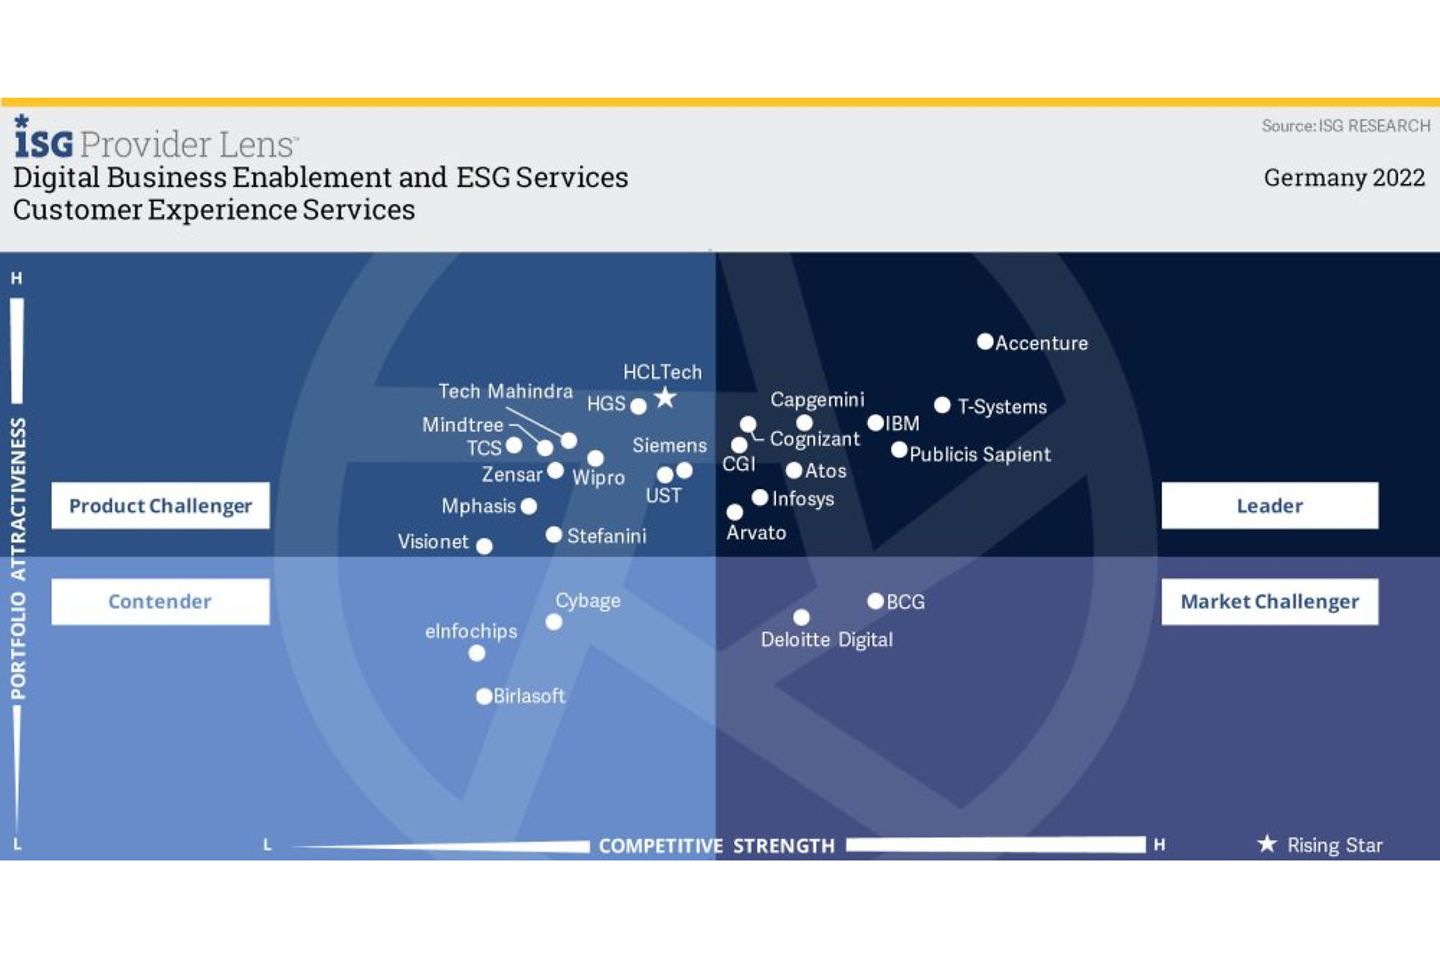 Quadrant Customer Experience Services